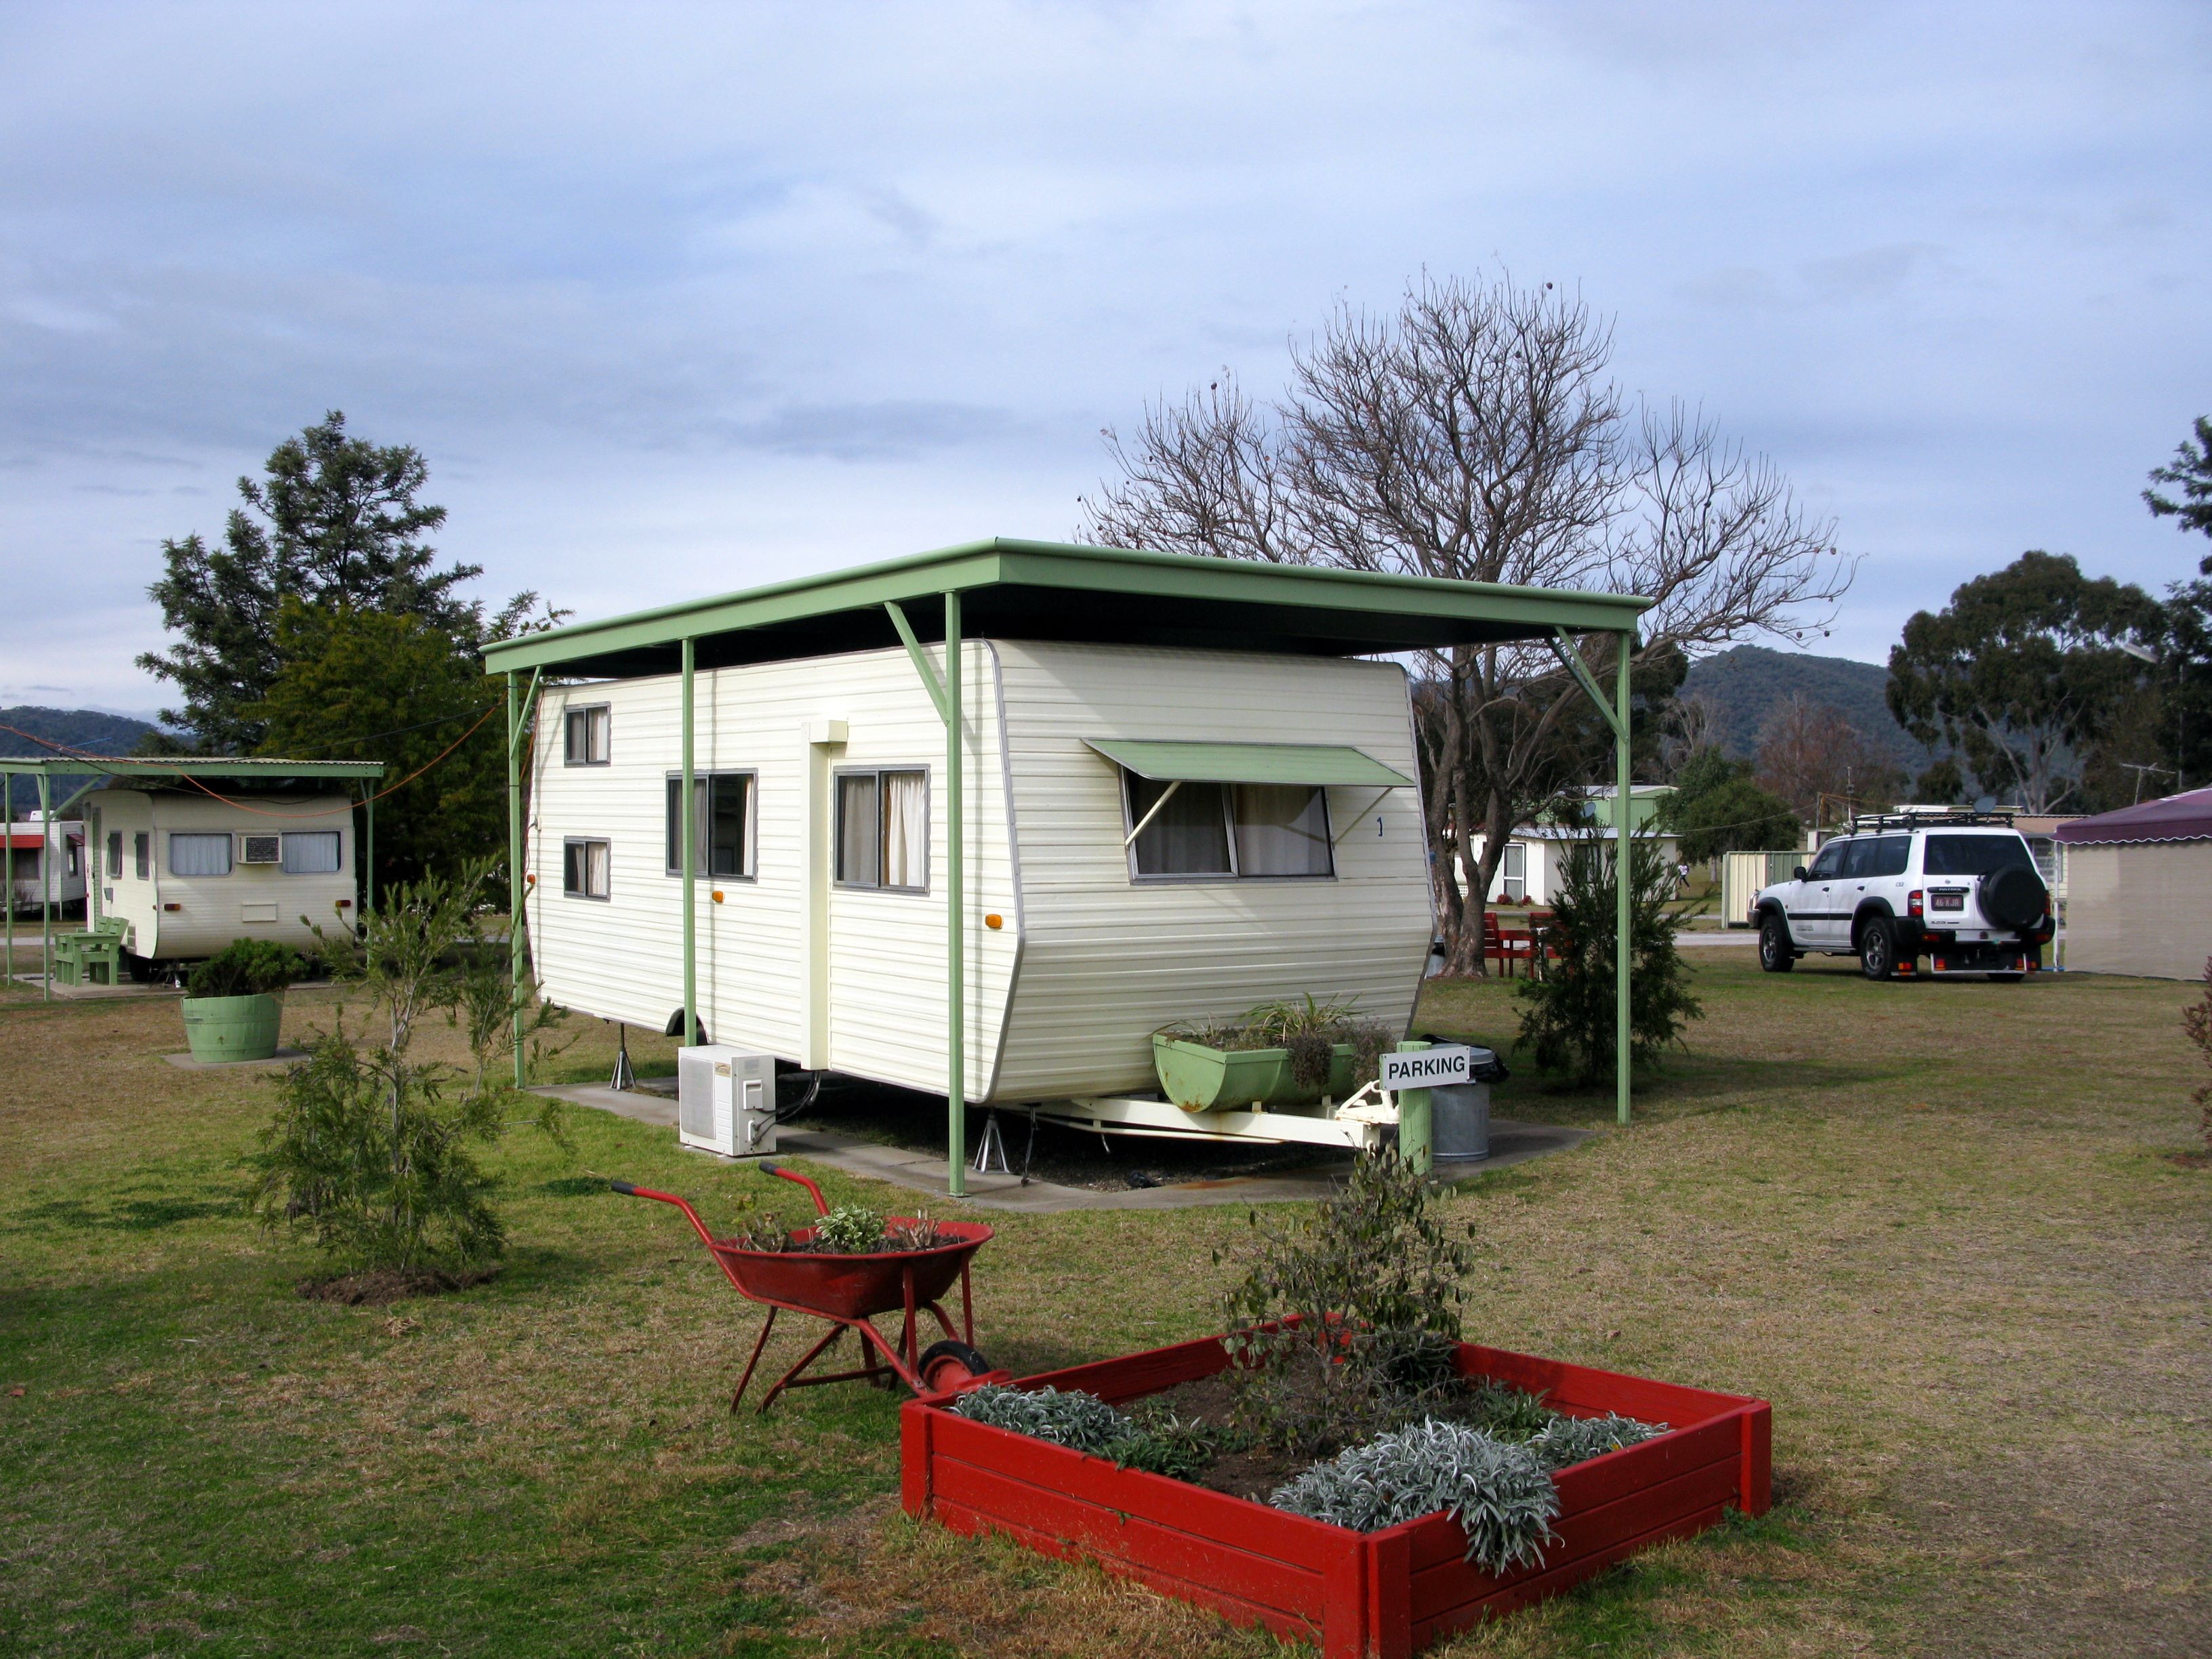 Kootingal Kourt Caravan Park - Kootingal: On site caravans for rent - these are in excellent condition